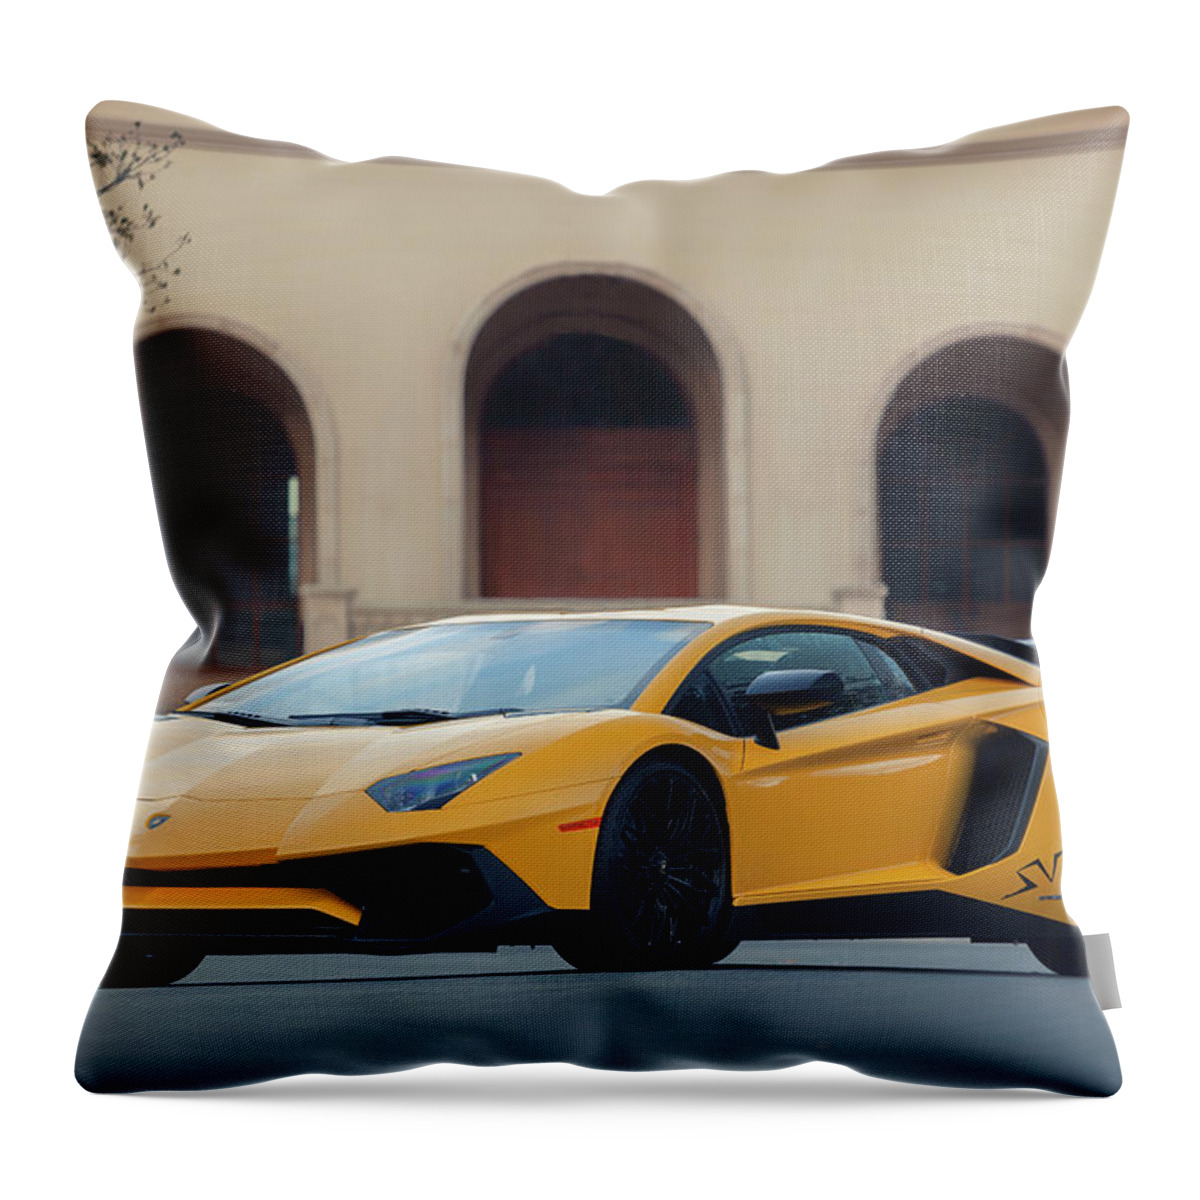 Lamborghini Throw Pillow featuring the photograph #Lamborghini #AventadorSV #SuperVeloce #Print #2 by ItzKirb Photography